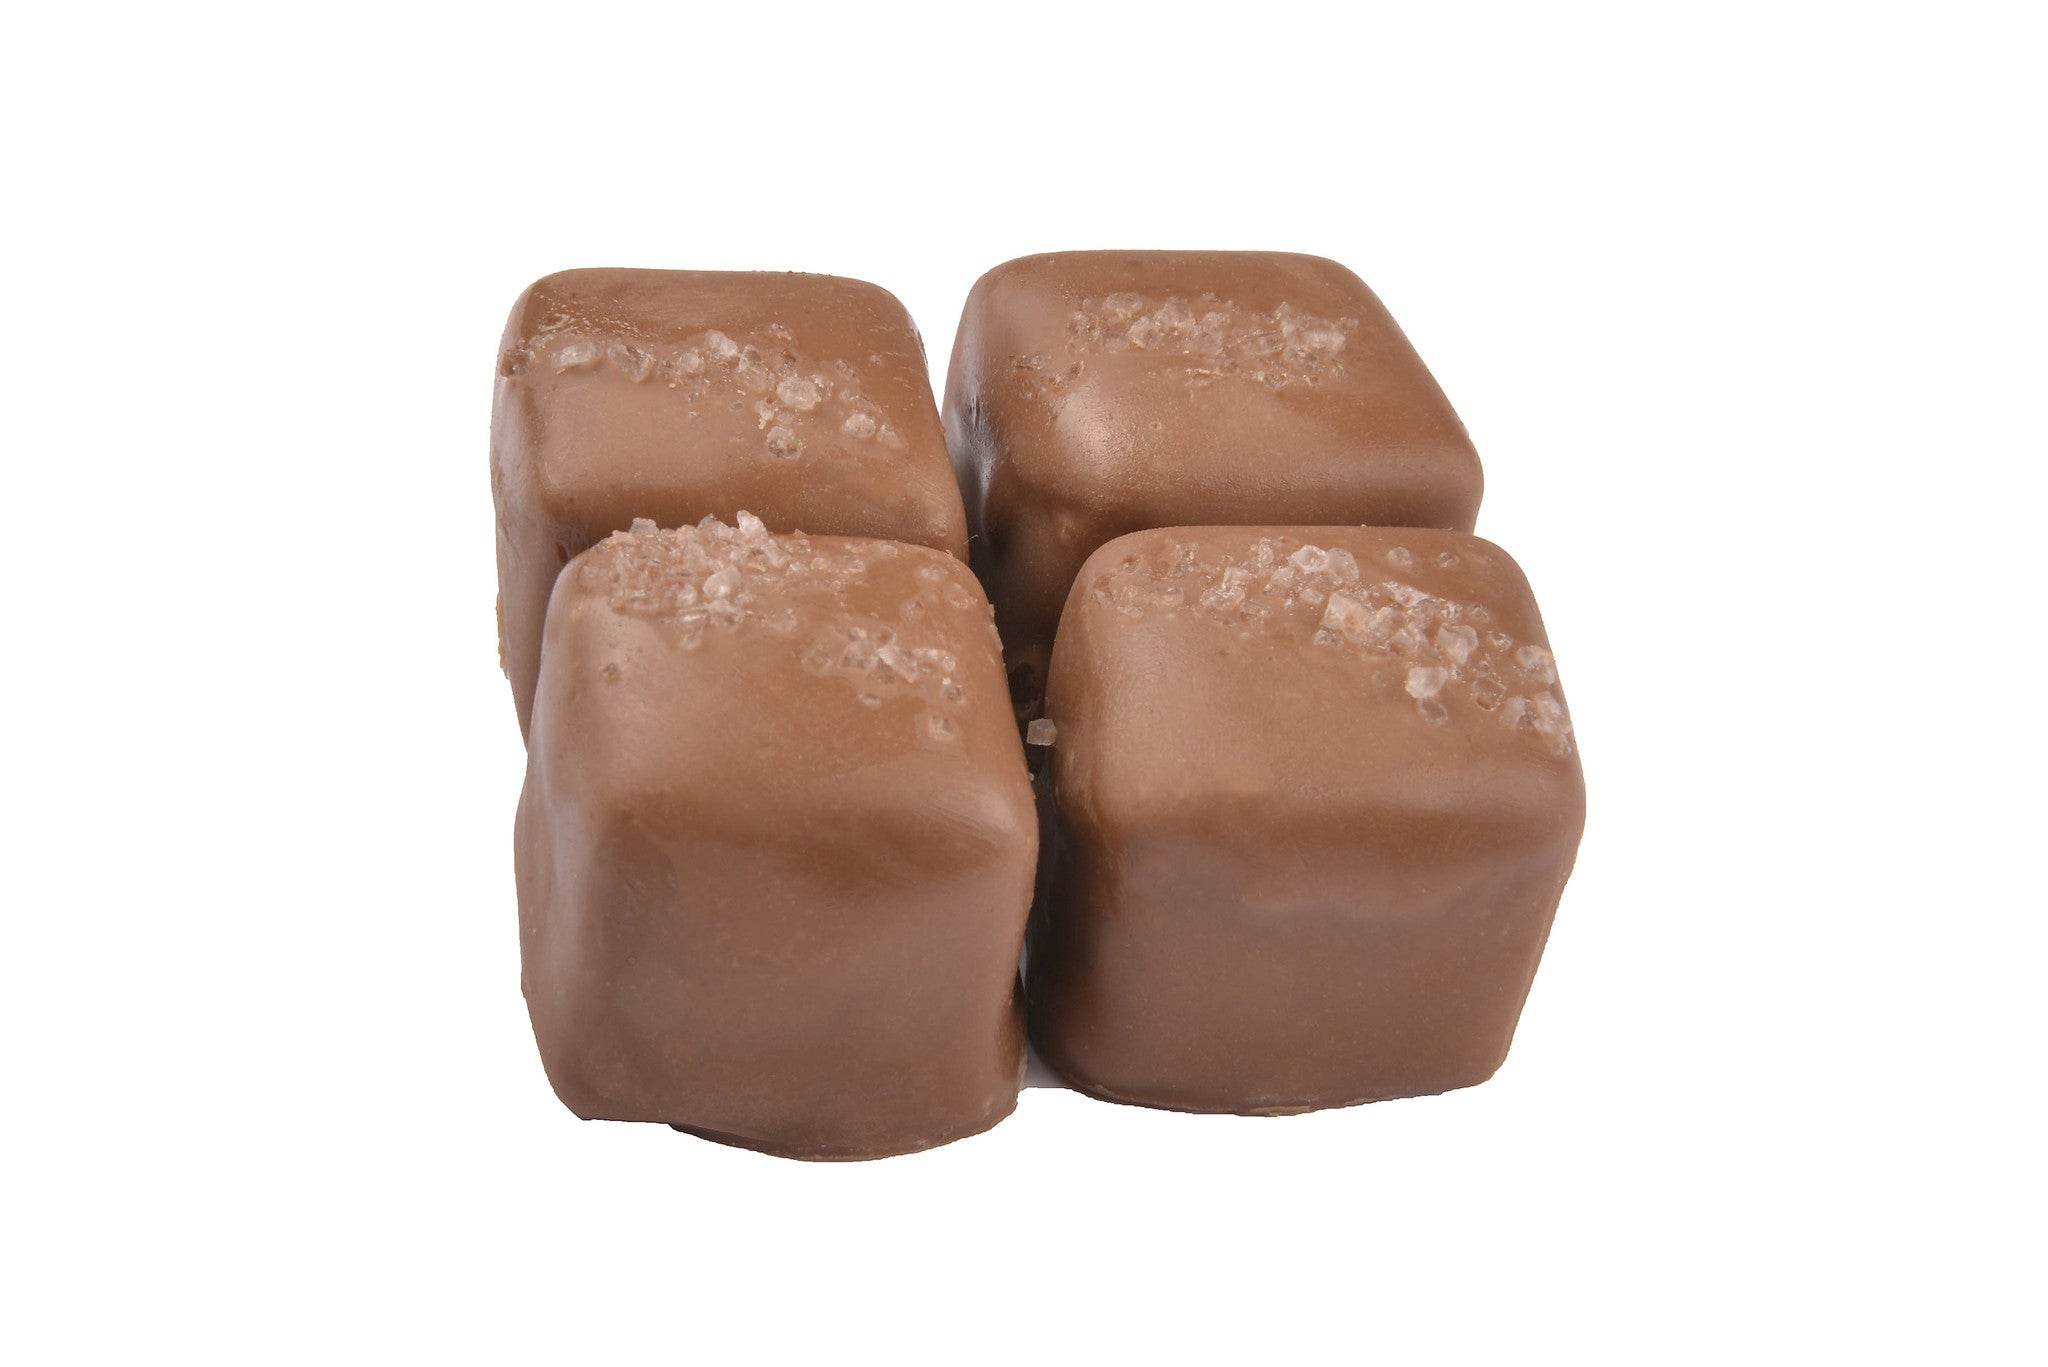 Milk Chocolate Sea Salt Caramels - 1 LB Box - All City Candy